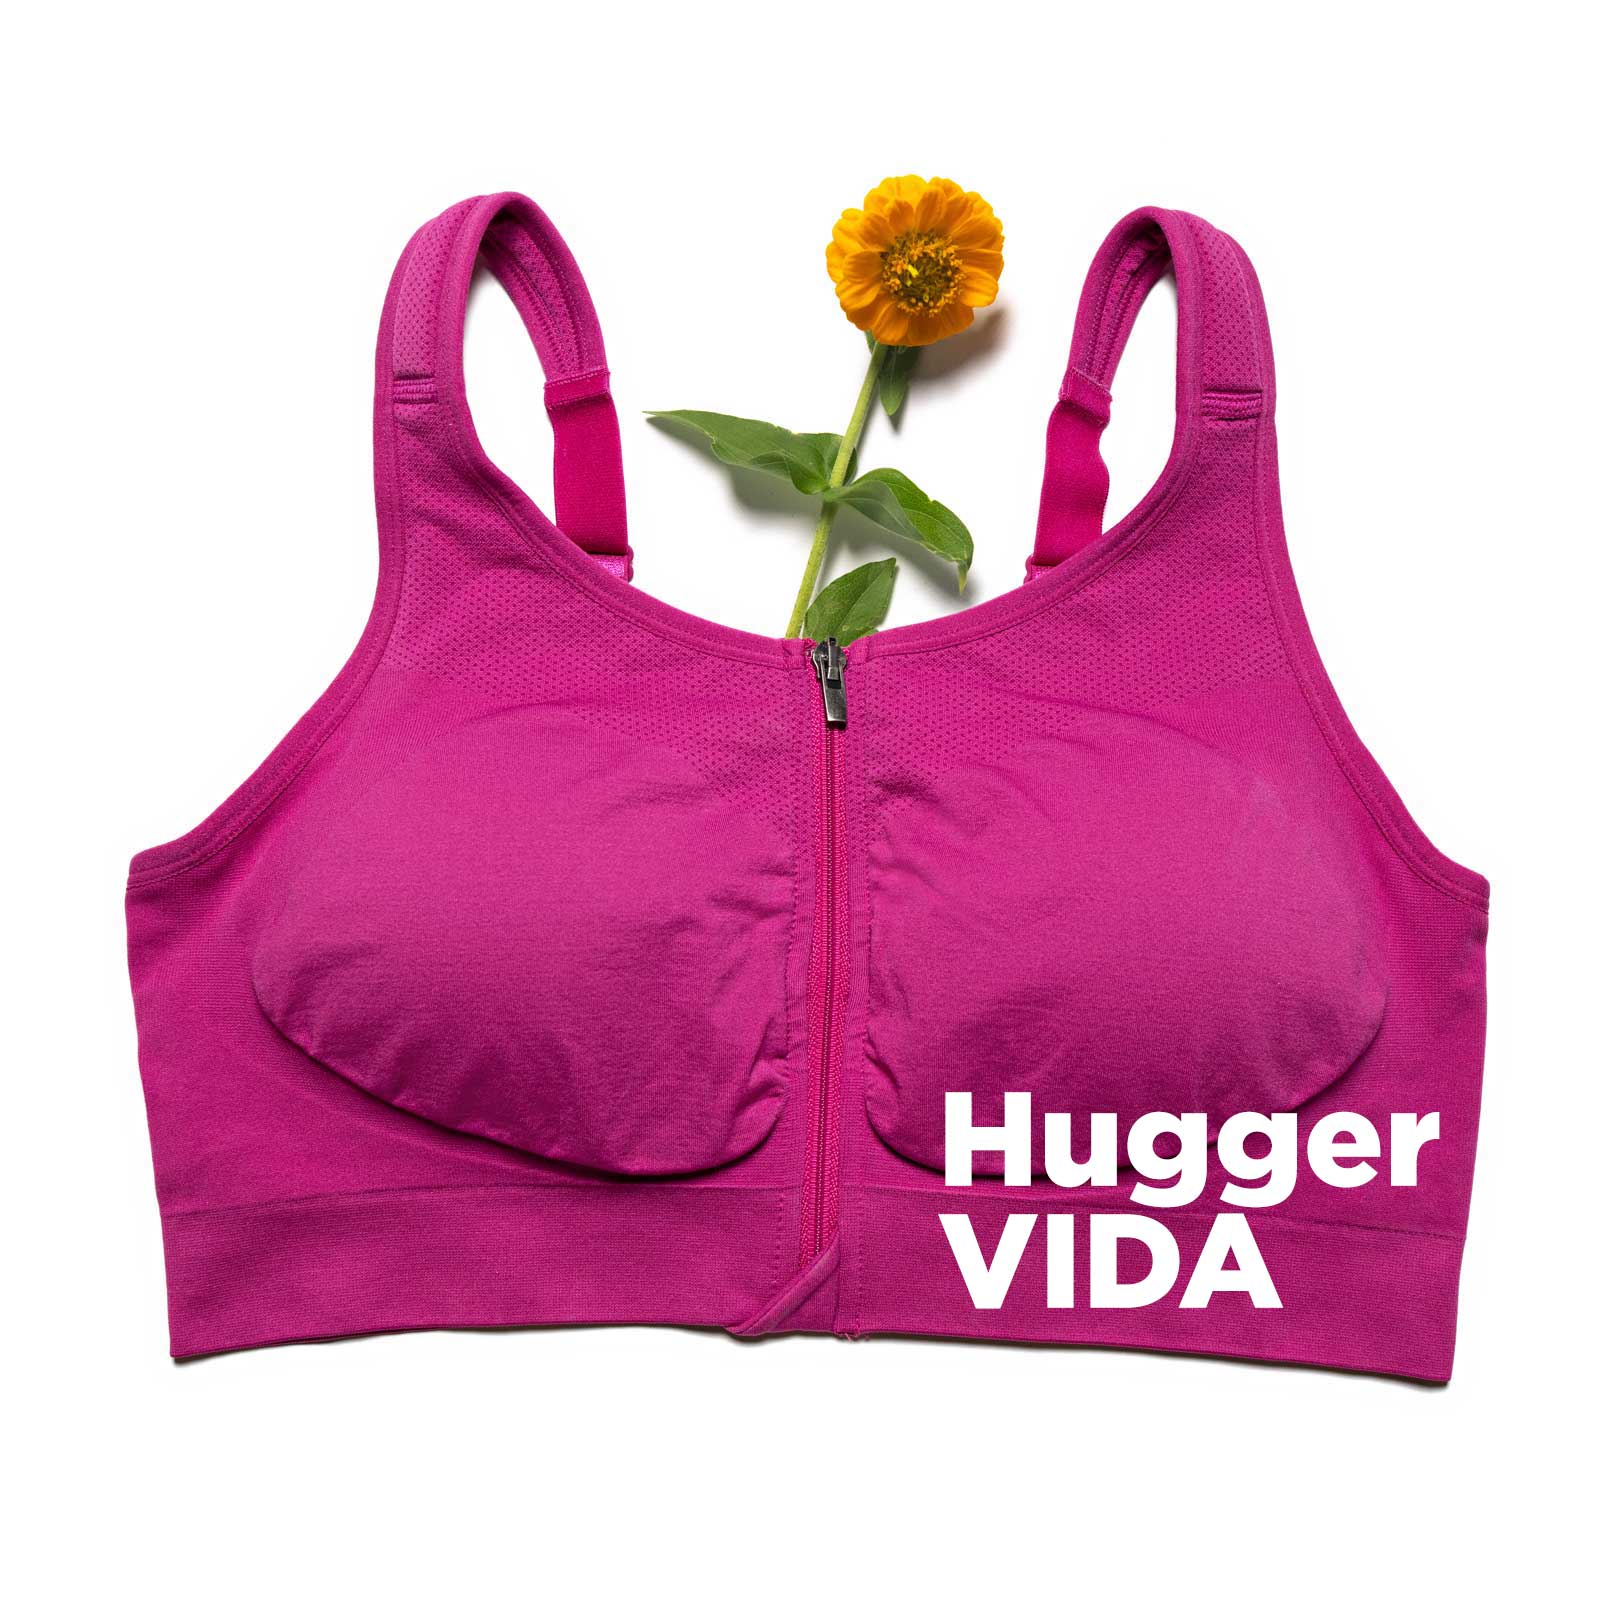 HuggerVIDA  Body friendly bra for post-surgical, lymphedema